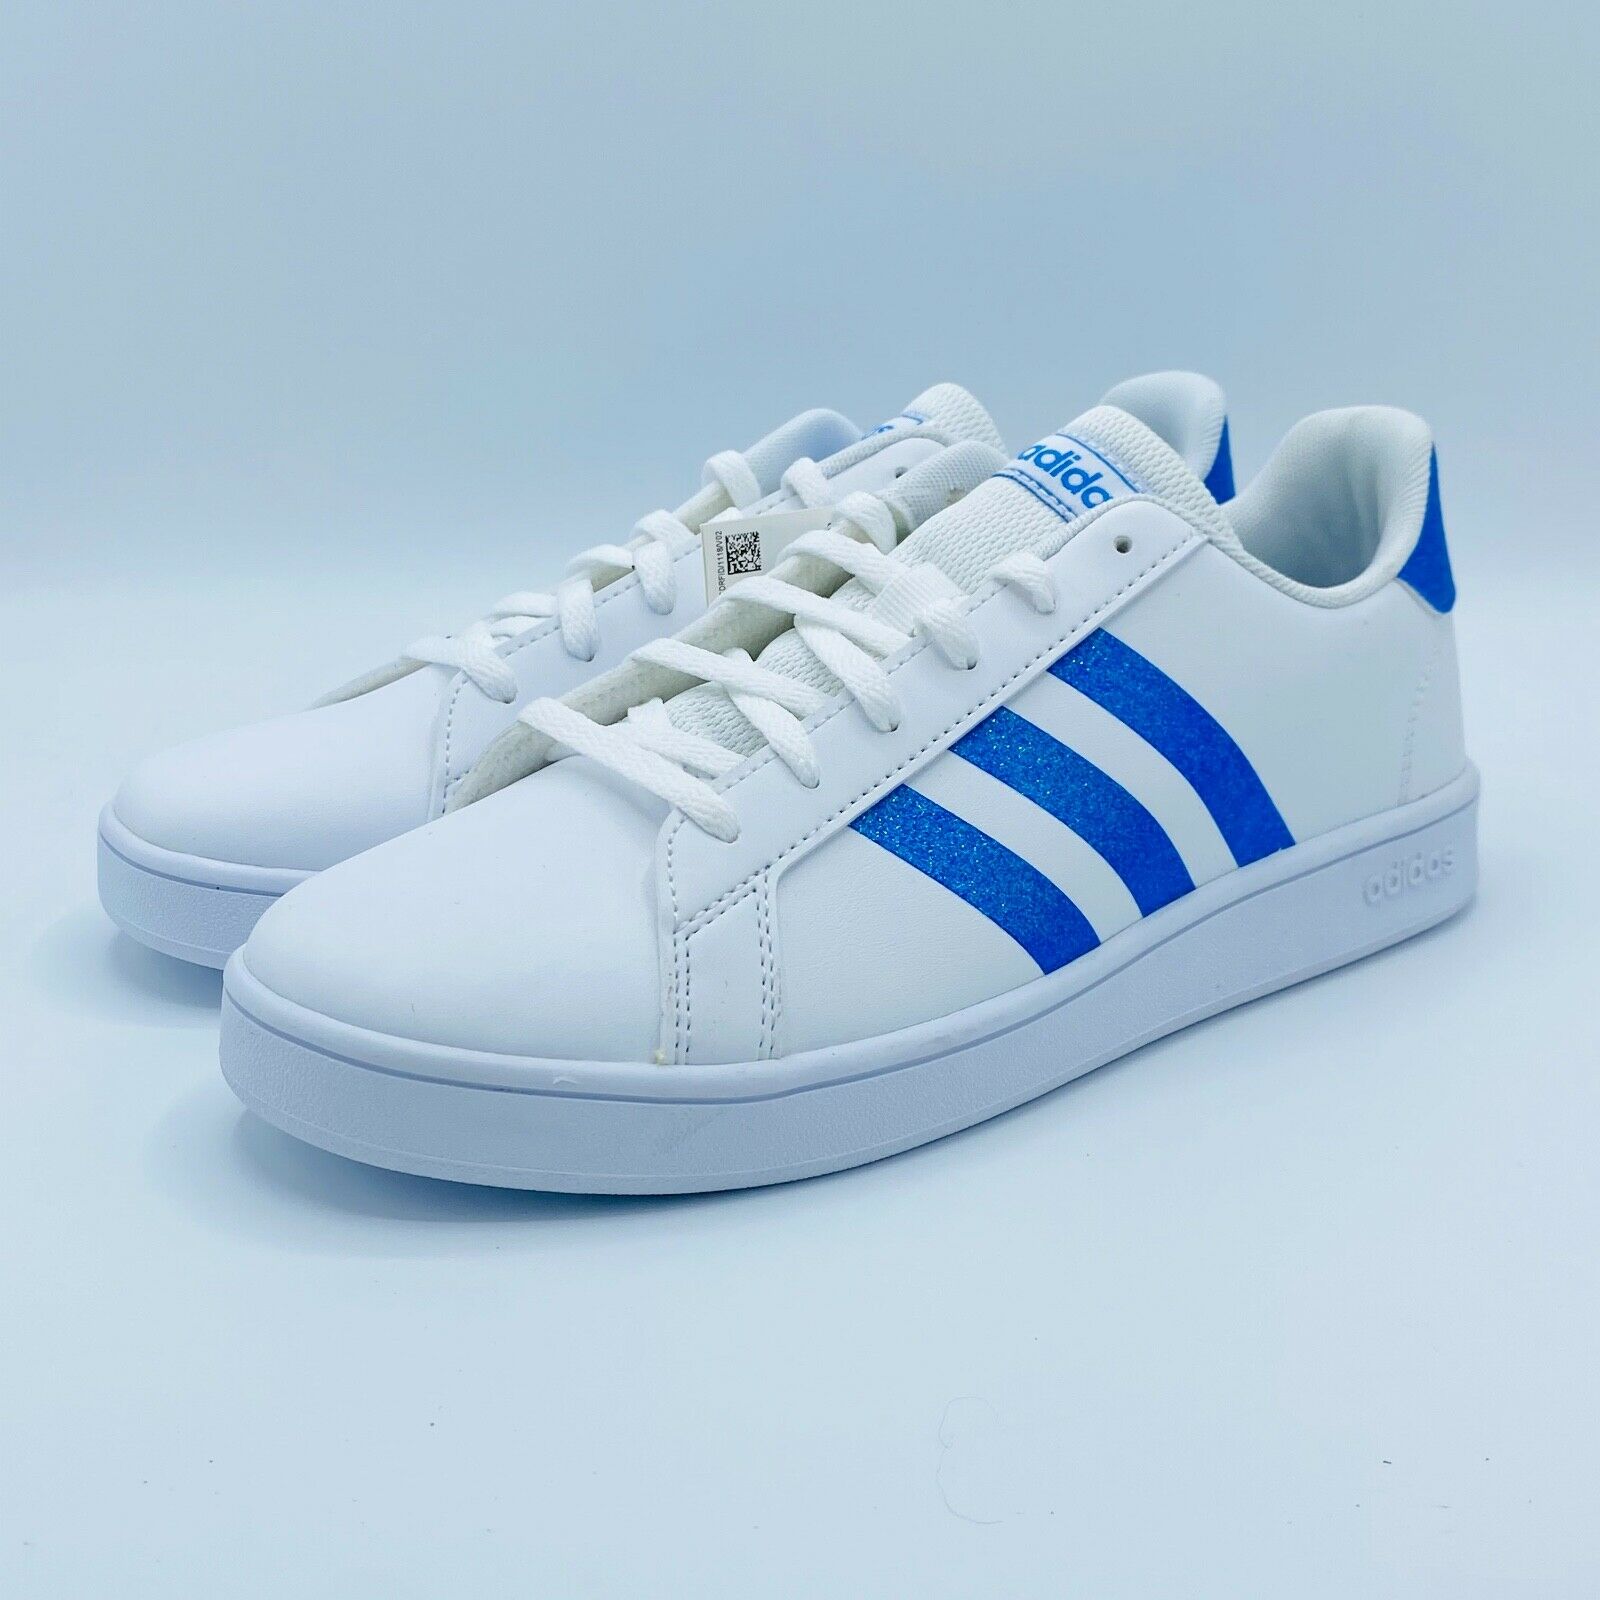 Adidas Grand Court K Shoes - Blue Glitter Size 5.5 Girls Youth (EG5135)